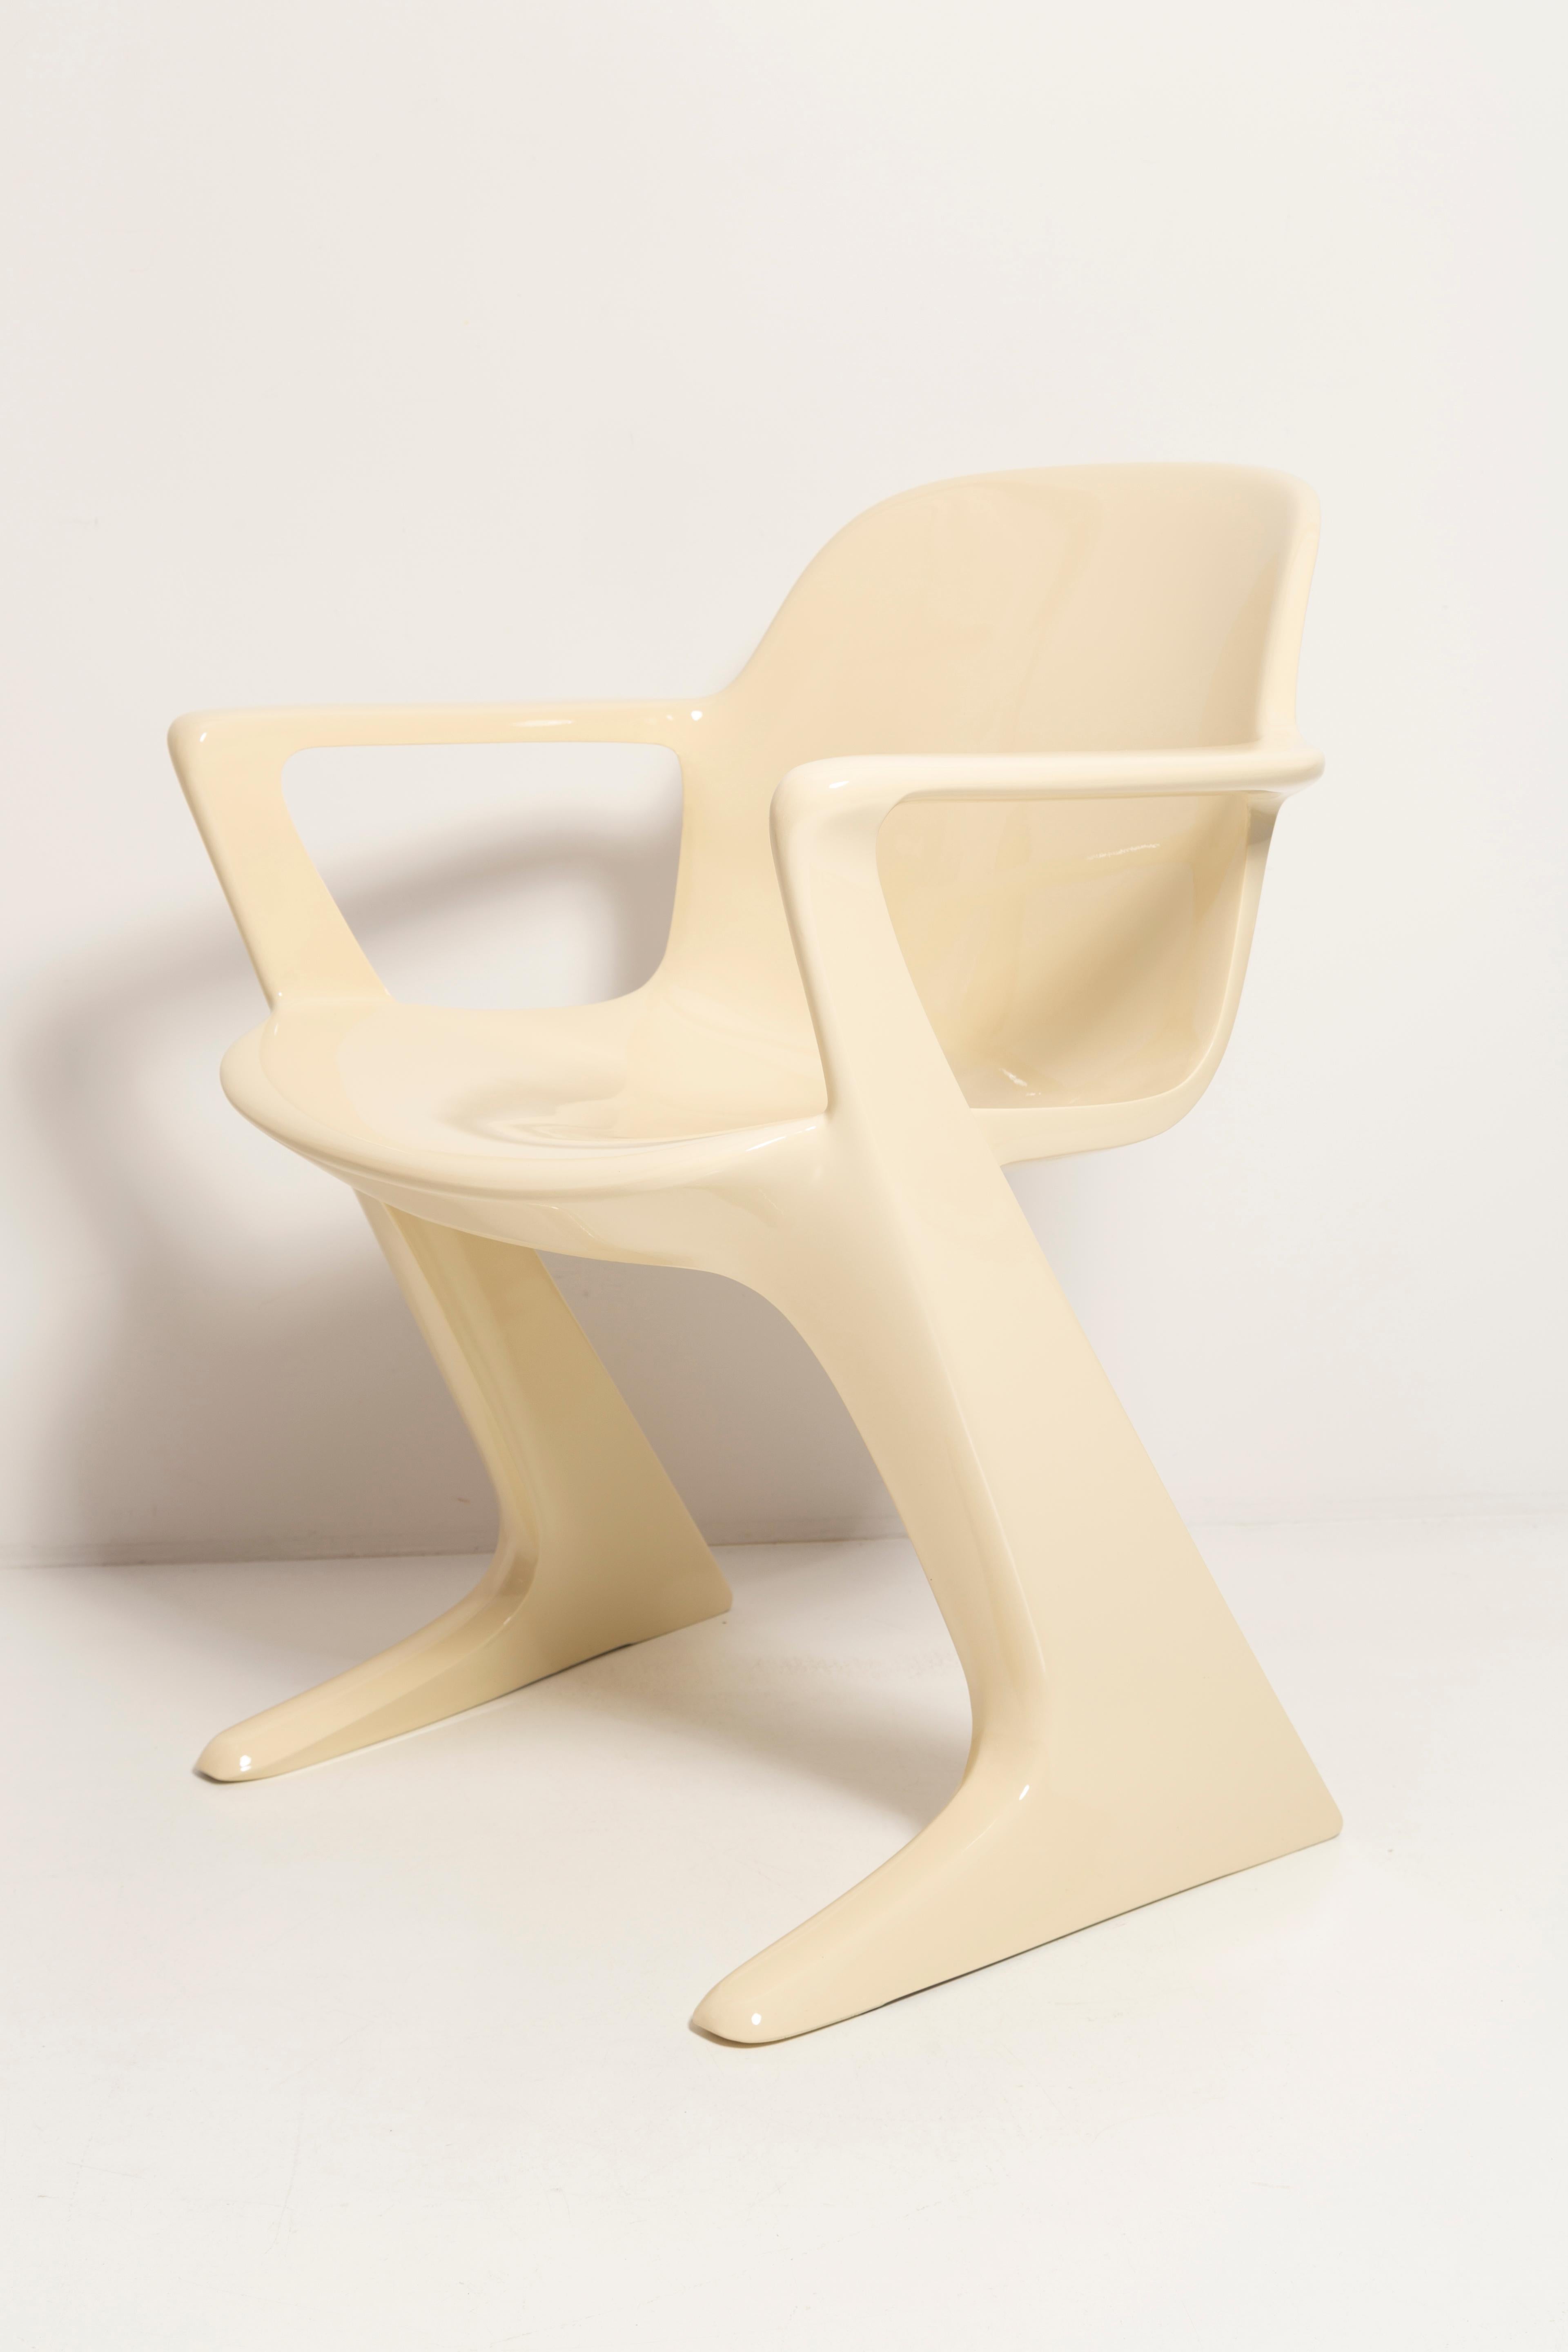 Pair of Mid-Century Light Beige Kangaroo Chairs, Ernst Moeckl, Germany, 1968 For Sale 1